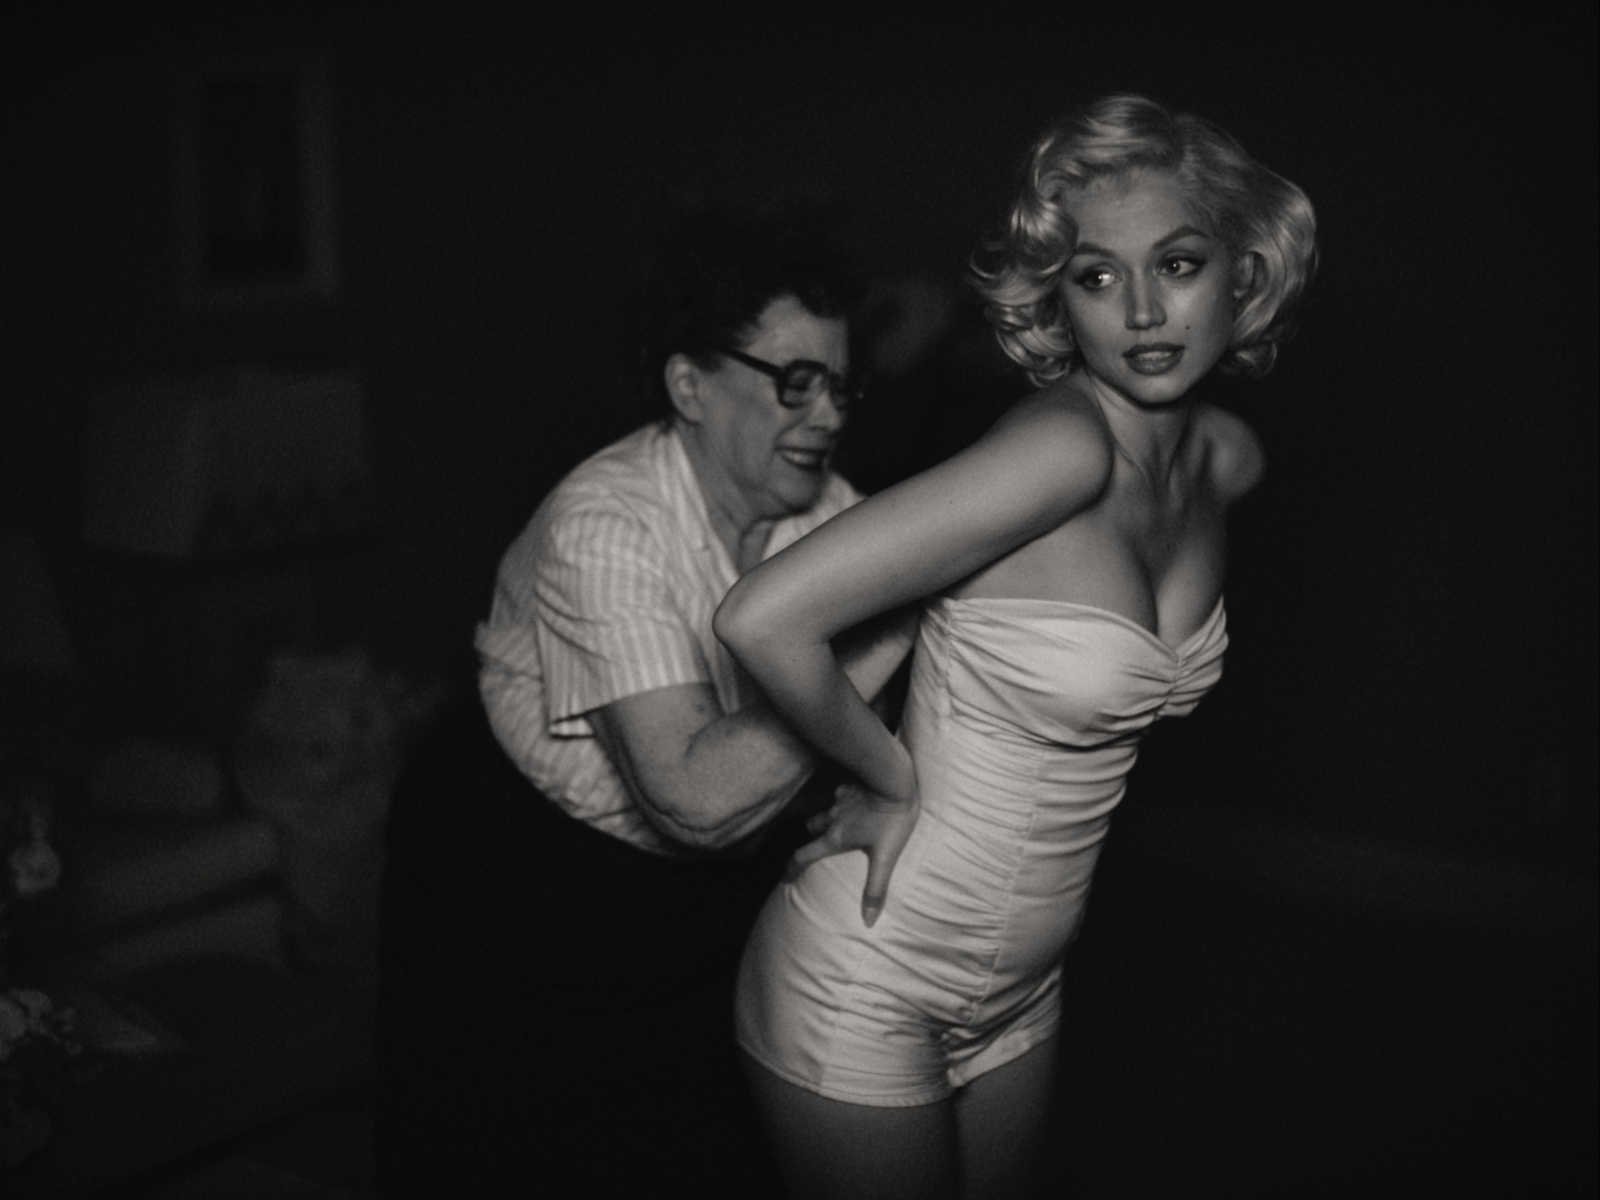 Se Ana de Armas som Marilyn Monroe i ny teaser